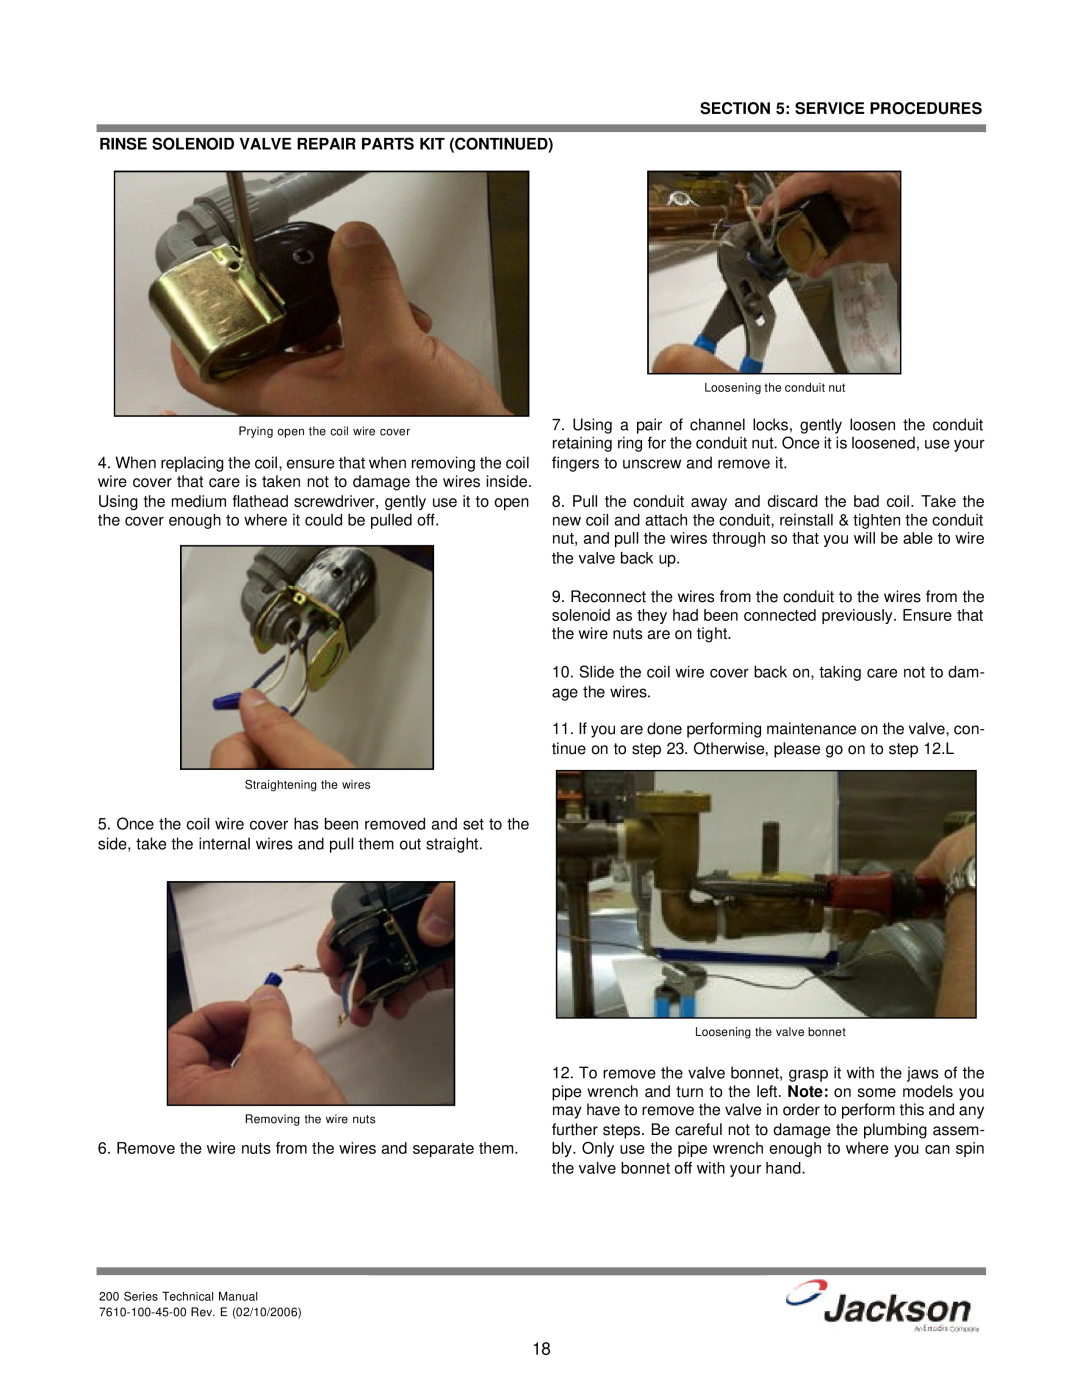 Jackson 200B, 200S, 200LT technical manual Rinse Solenoid Valve Repair Parts Kit Continued, Service Procedures 